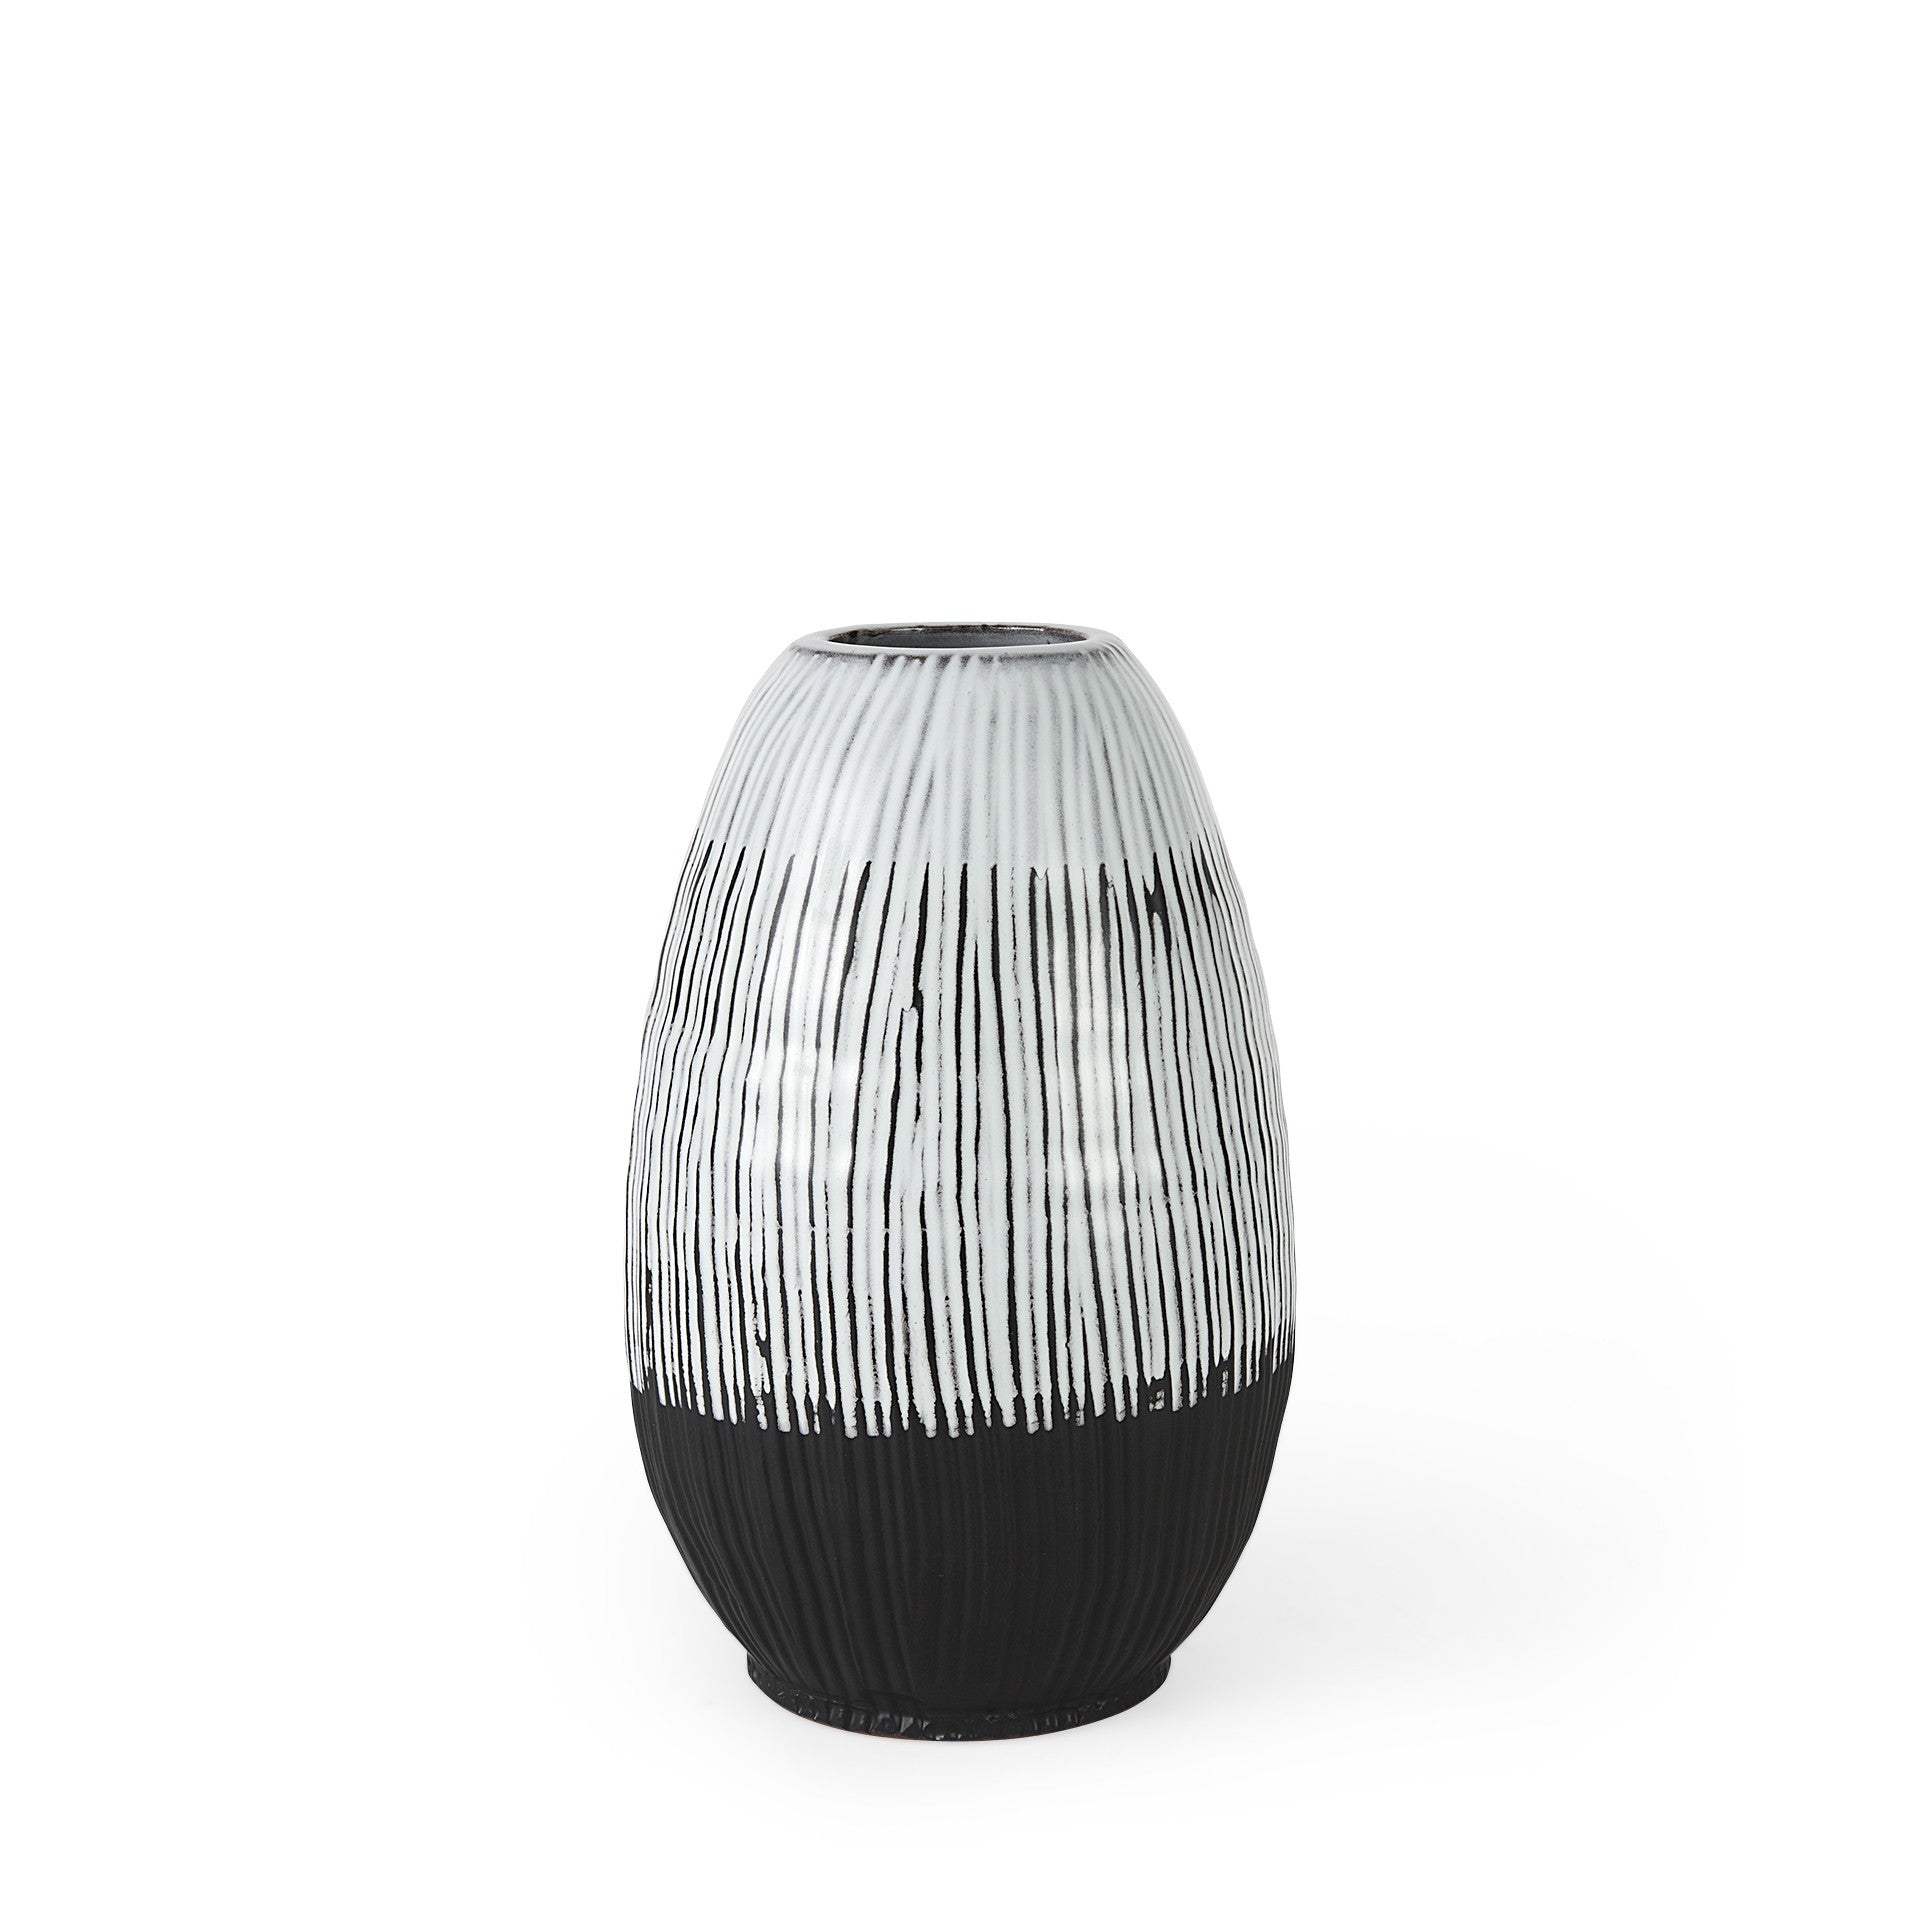 13" Black White and Gray Patterned Lines Ceramic Vase-0